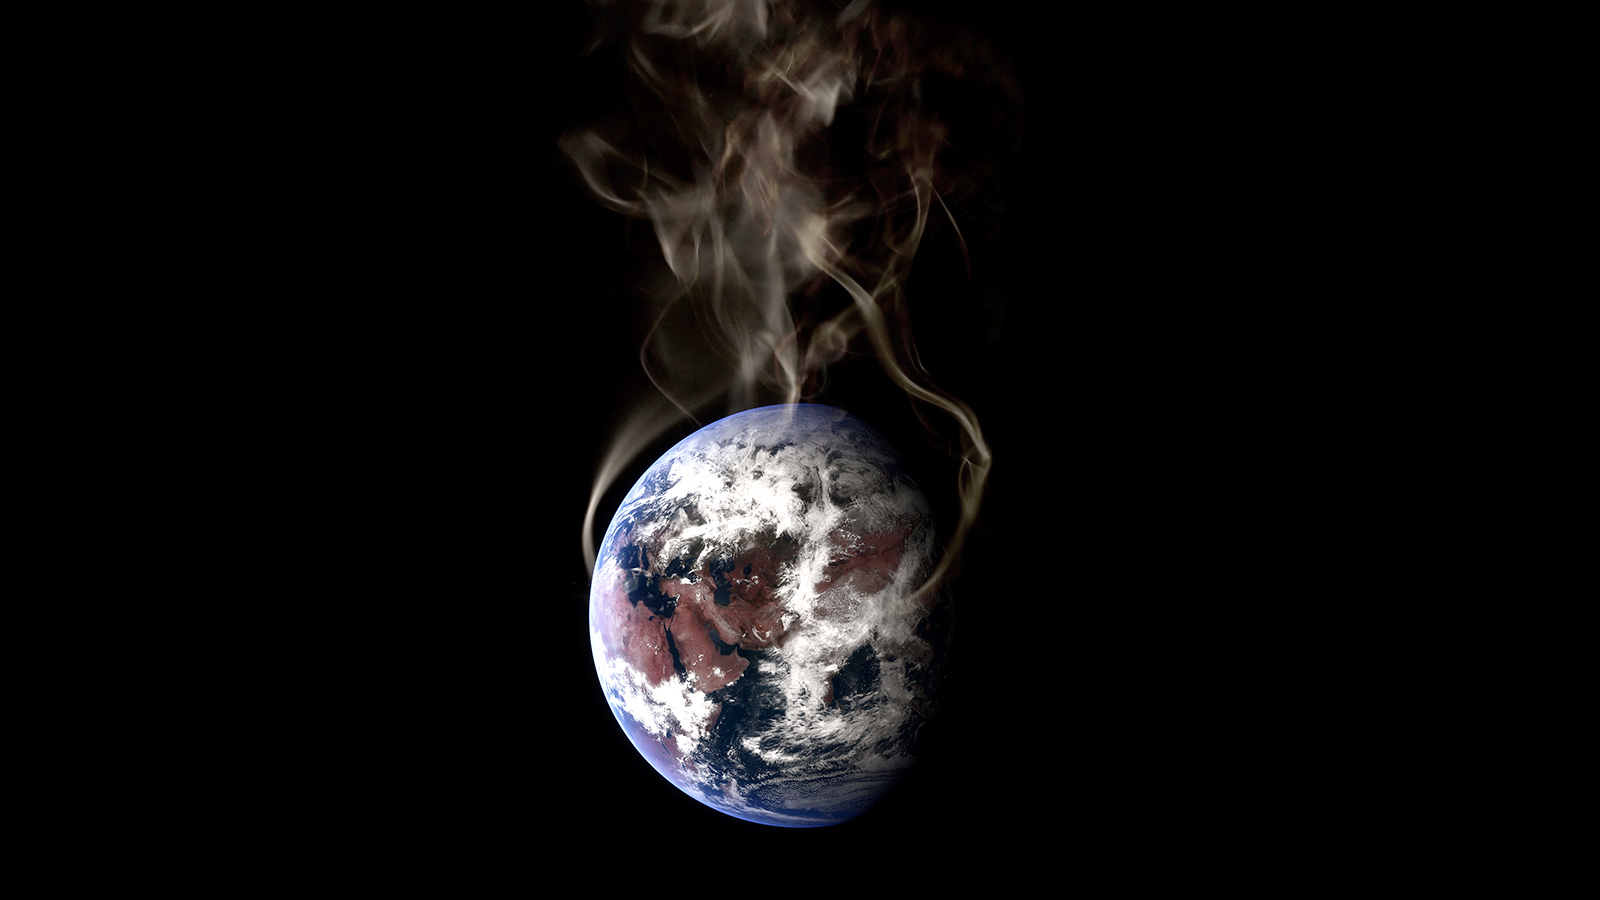 Burning earth